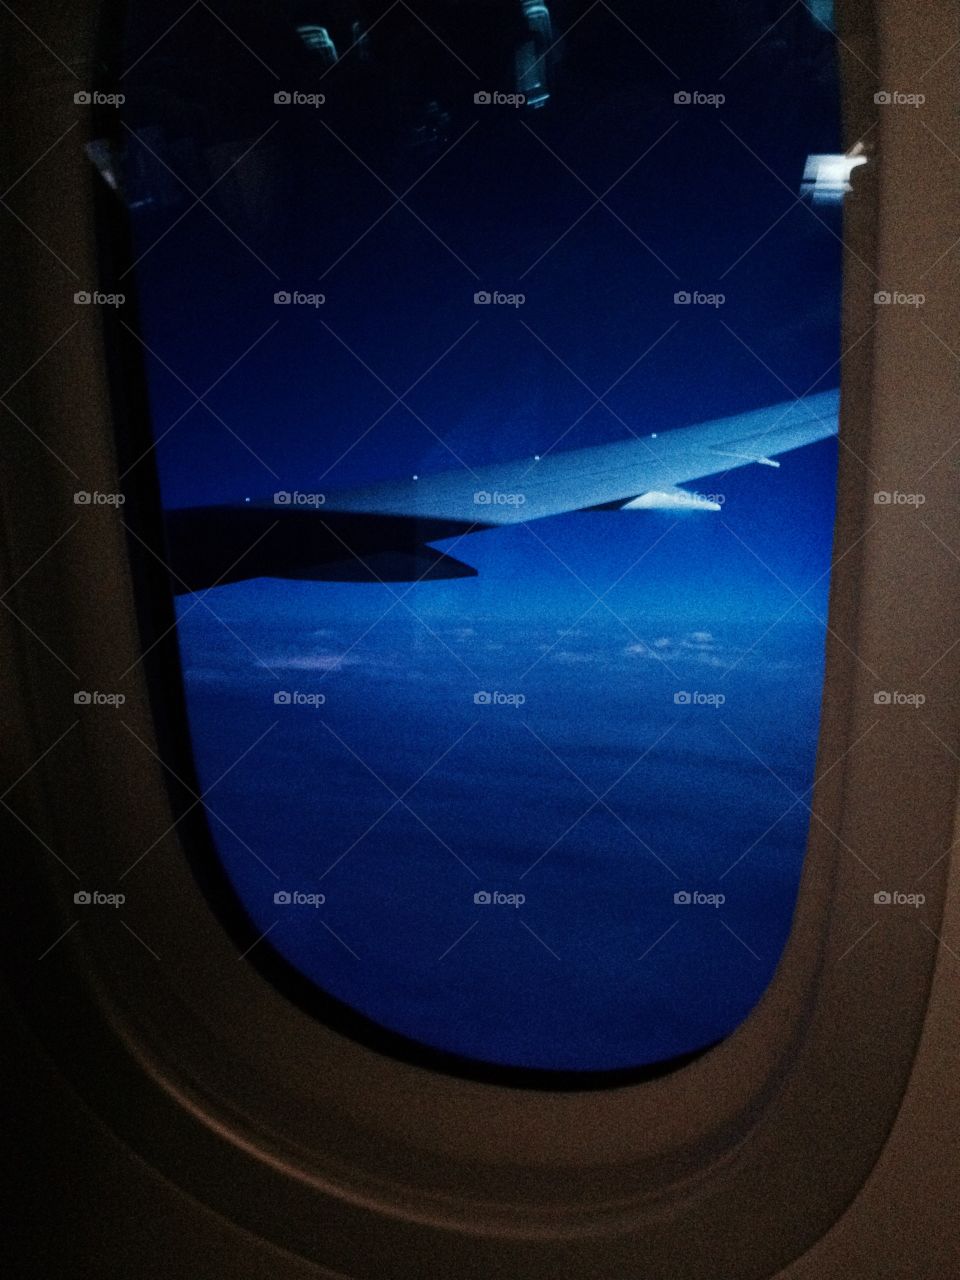 Passenger view. Plane passenger view with shade